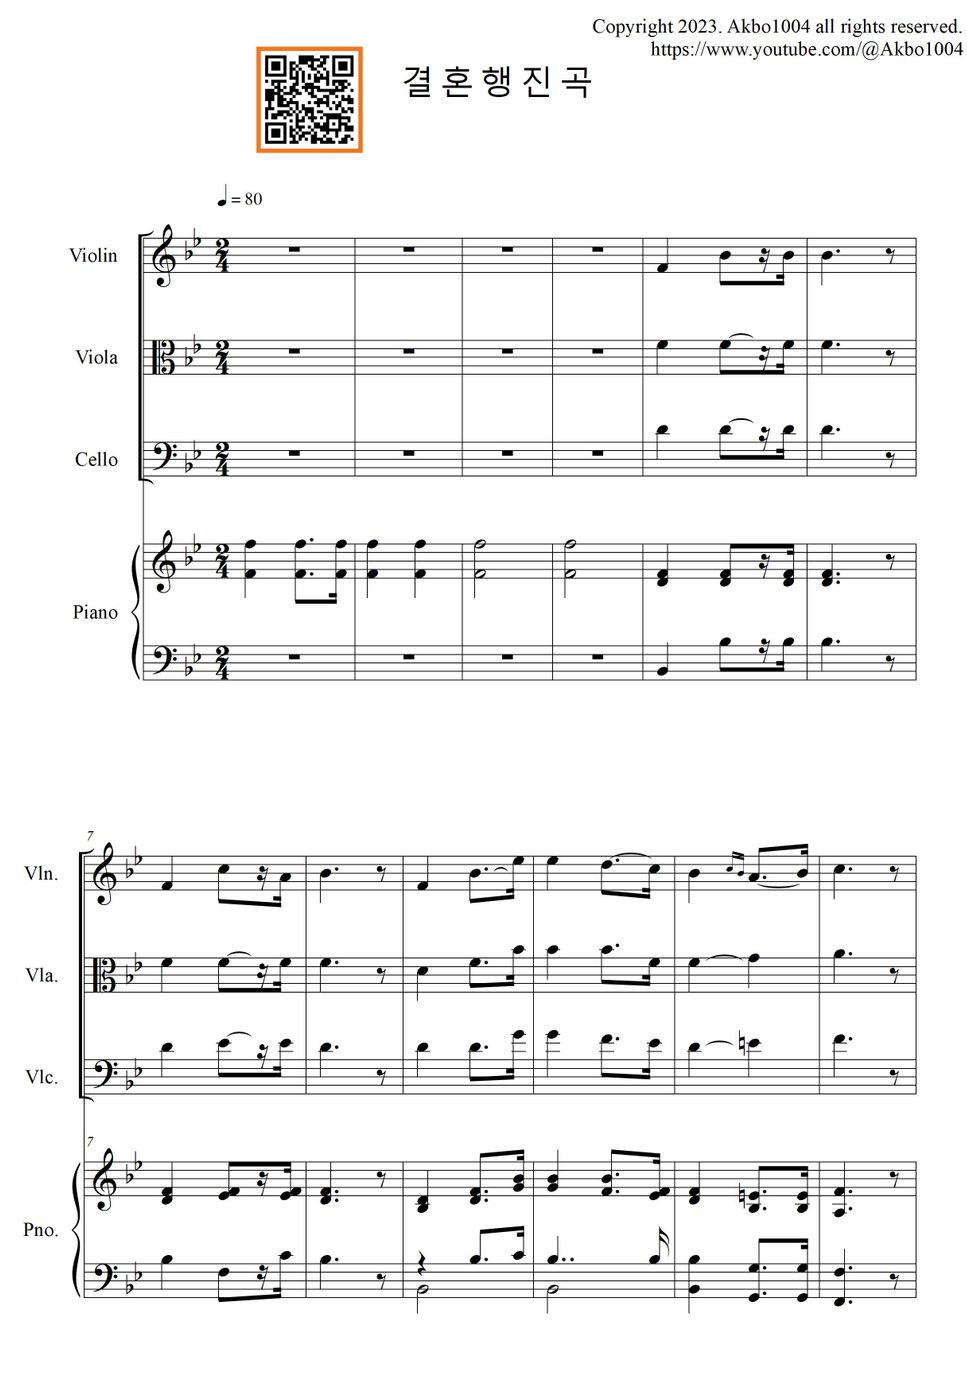 Wilhelm Richard Wagne - 결혼행진곡 (결혼행진곡 / 결혼식 / 피아노 4중주 / 편곡) by Akbo1004